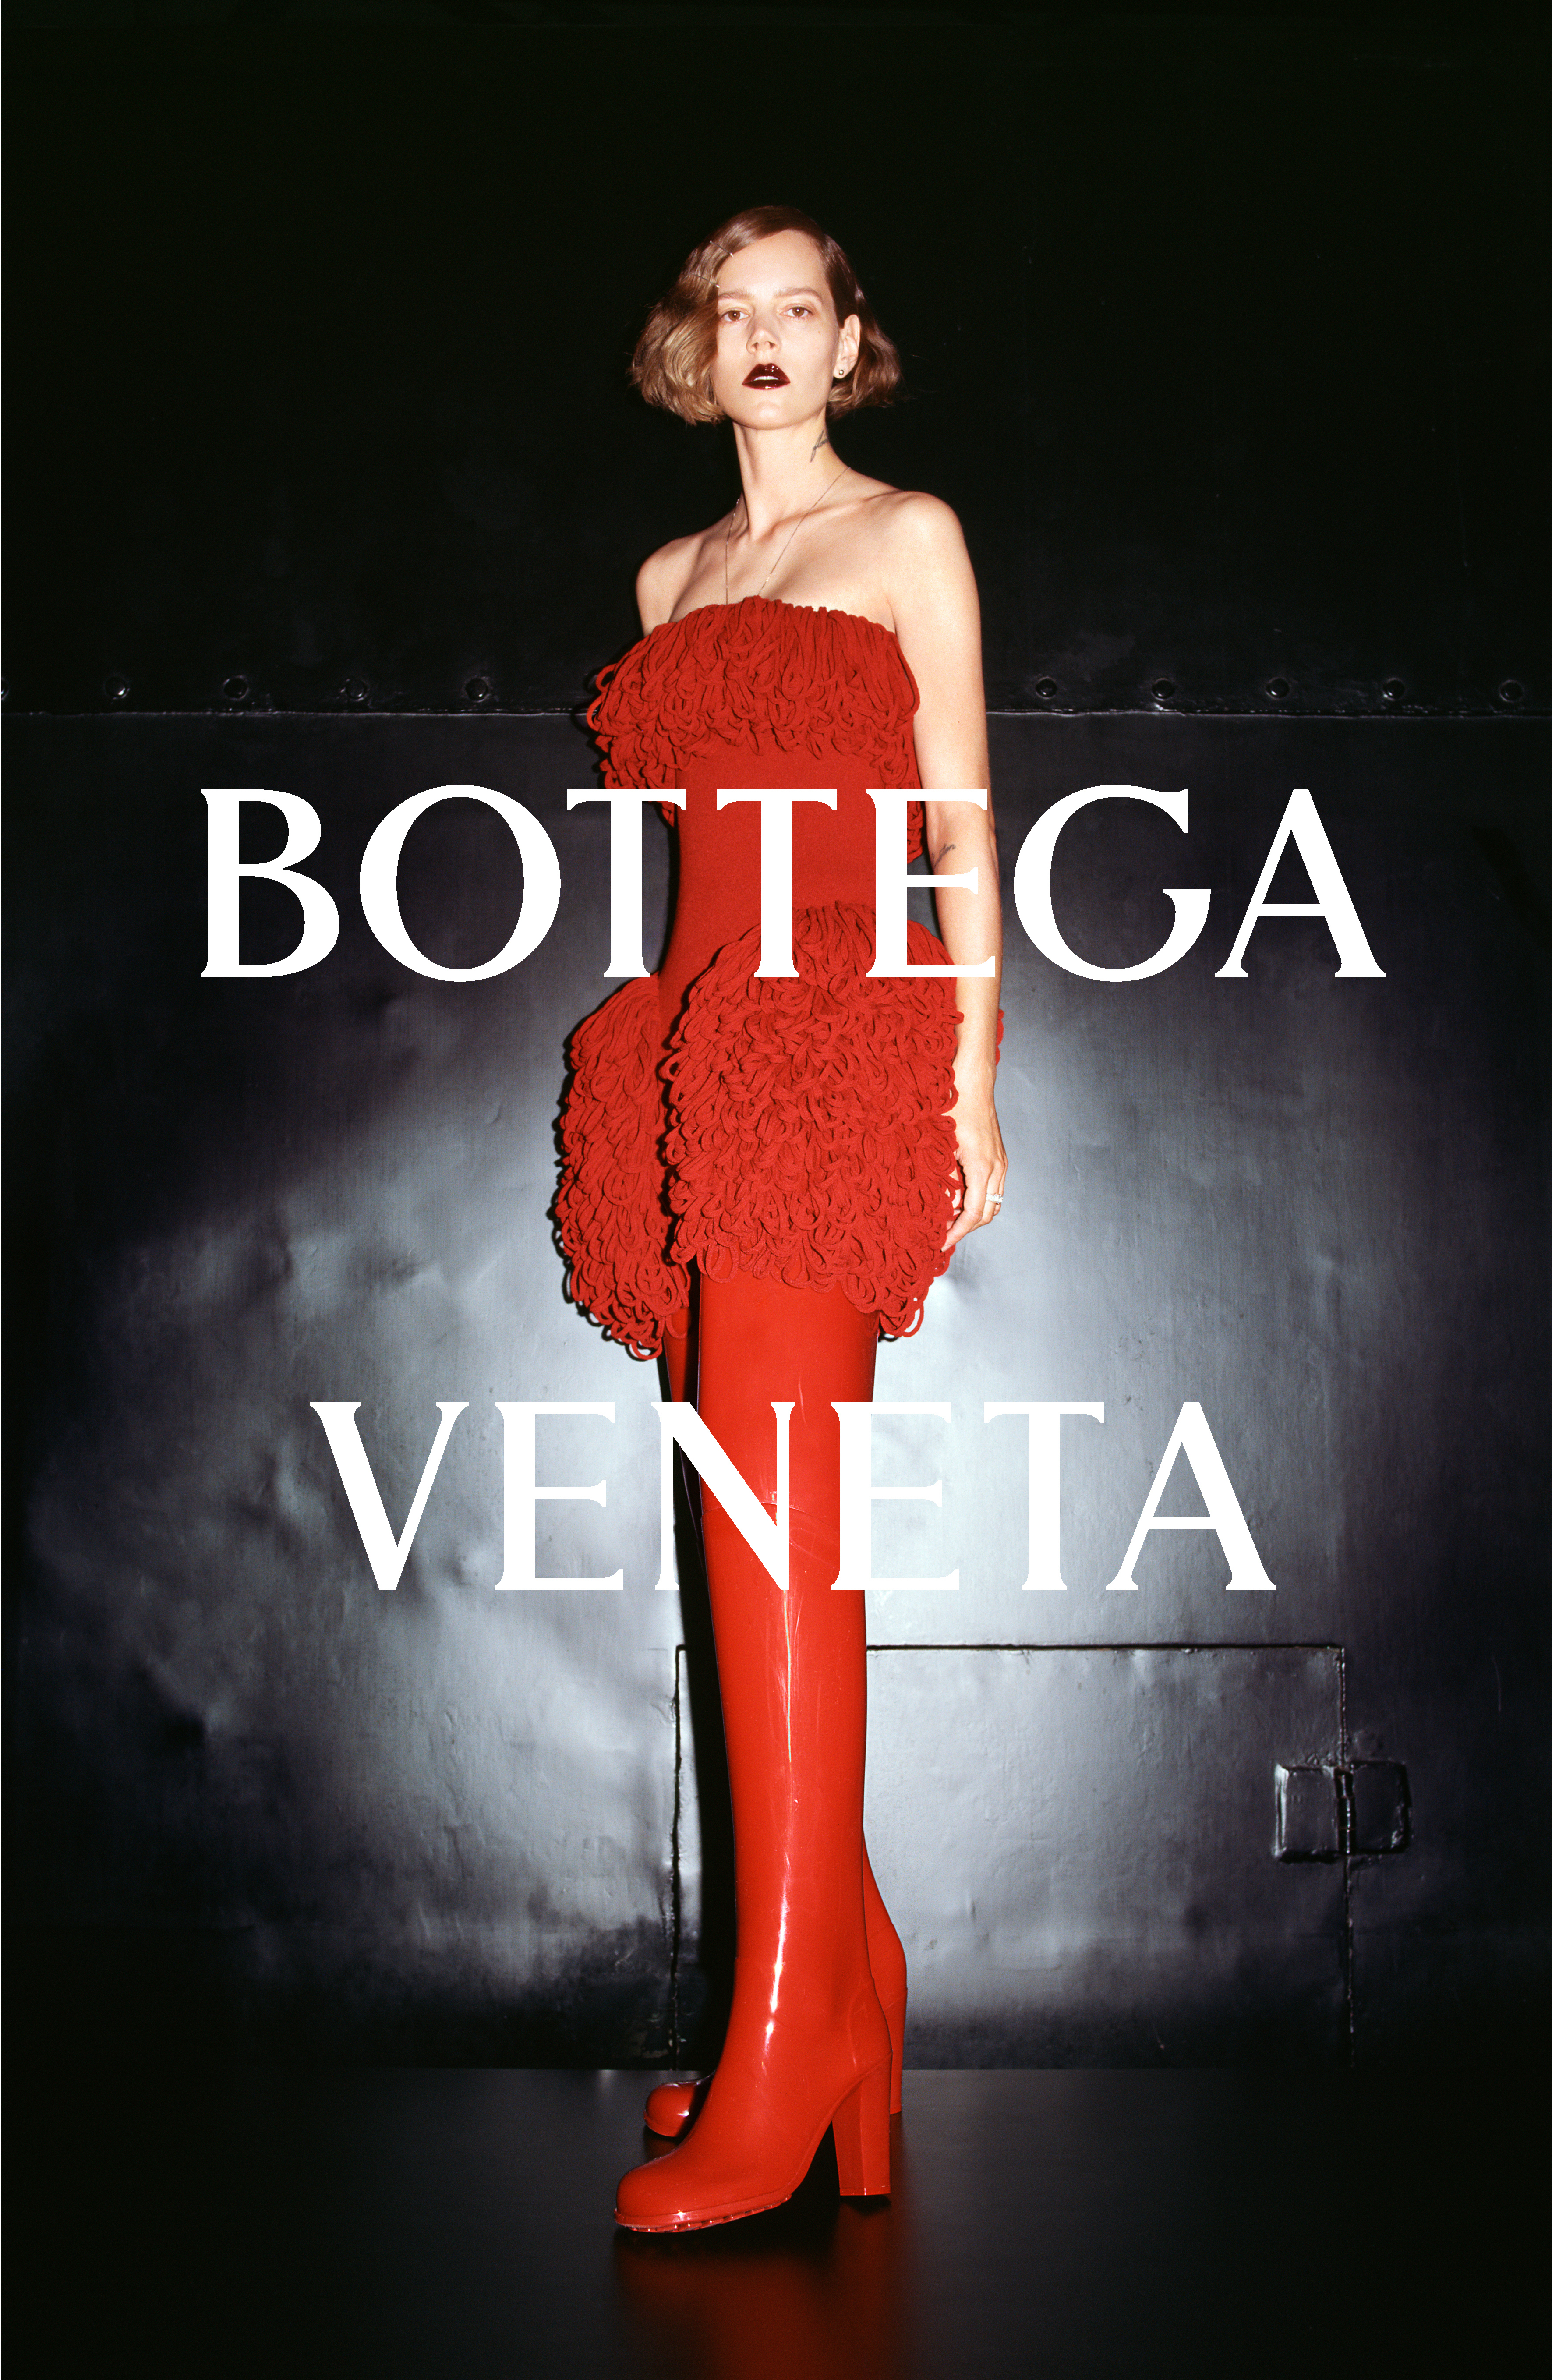 The Story of Bottega Veneta and Daniel Lee